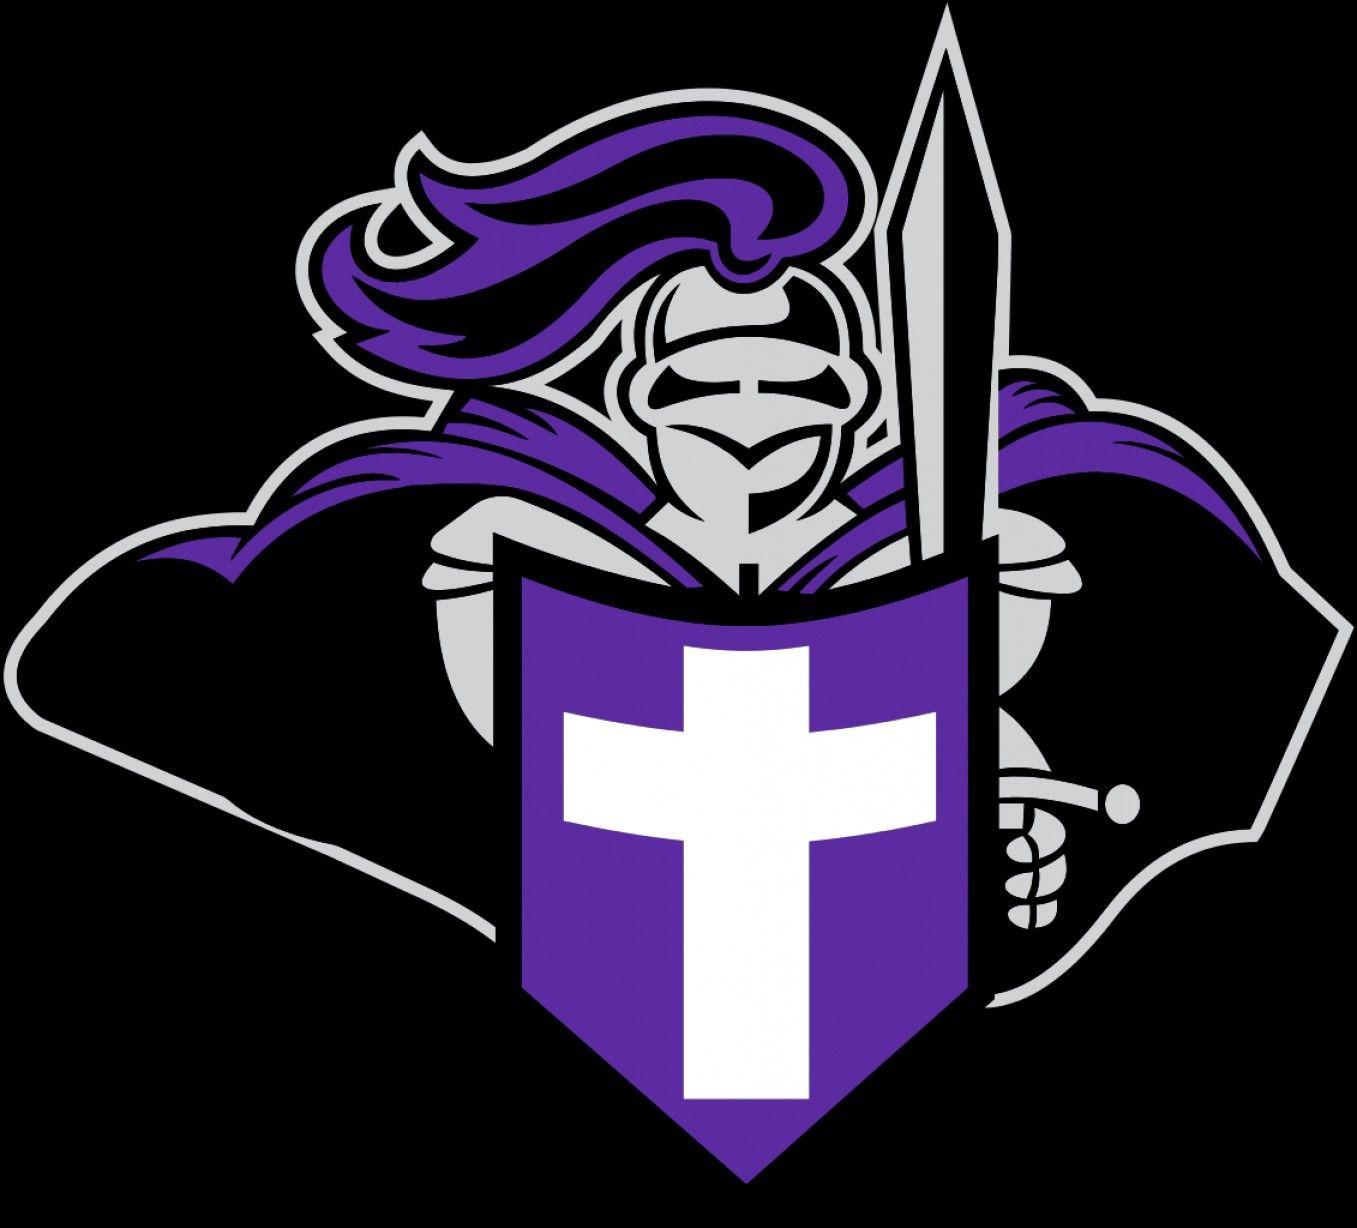 Crusader Cross Logo - Best Holy Cross Crusaders Images | SHOPATCLOTH